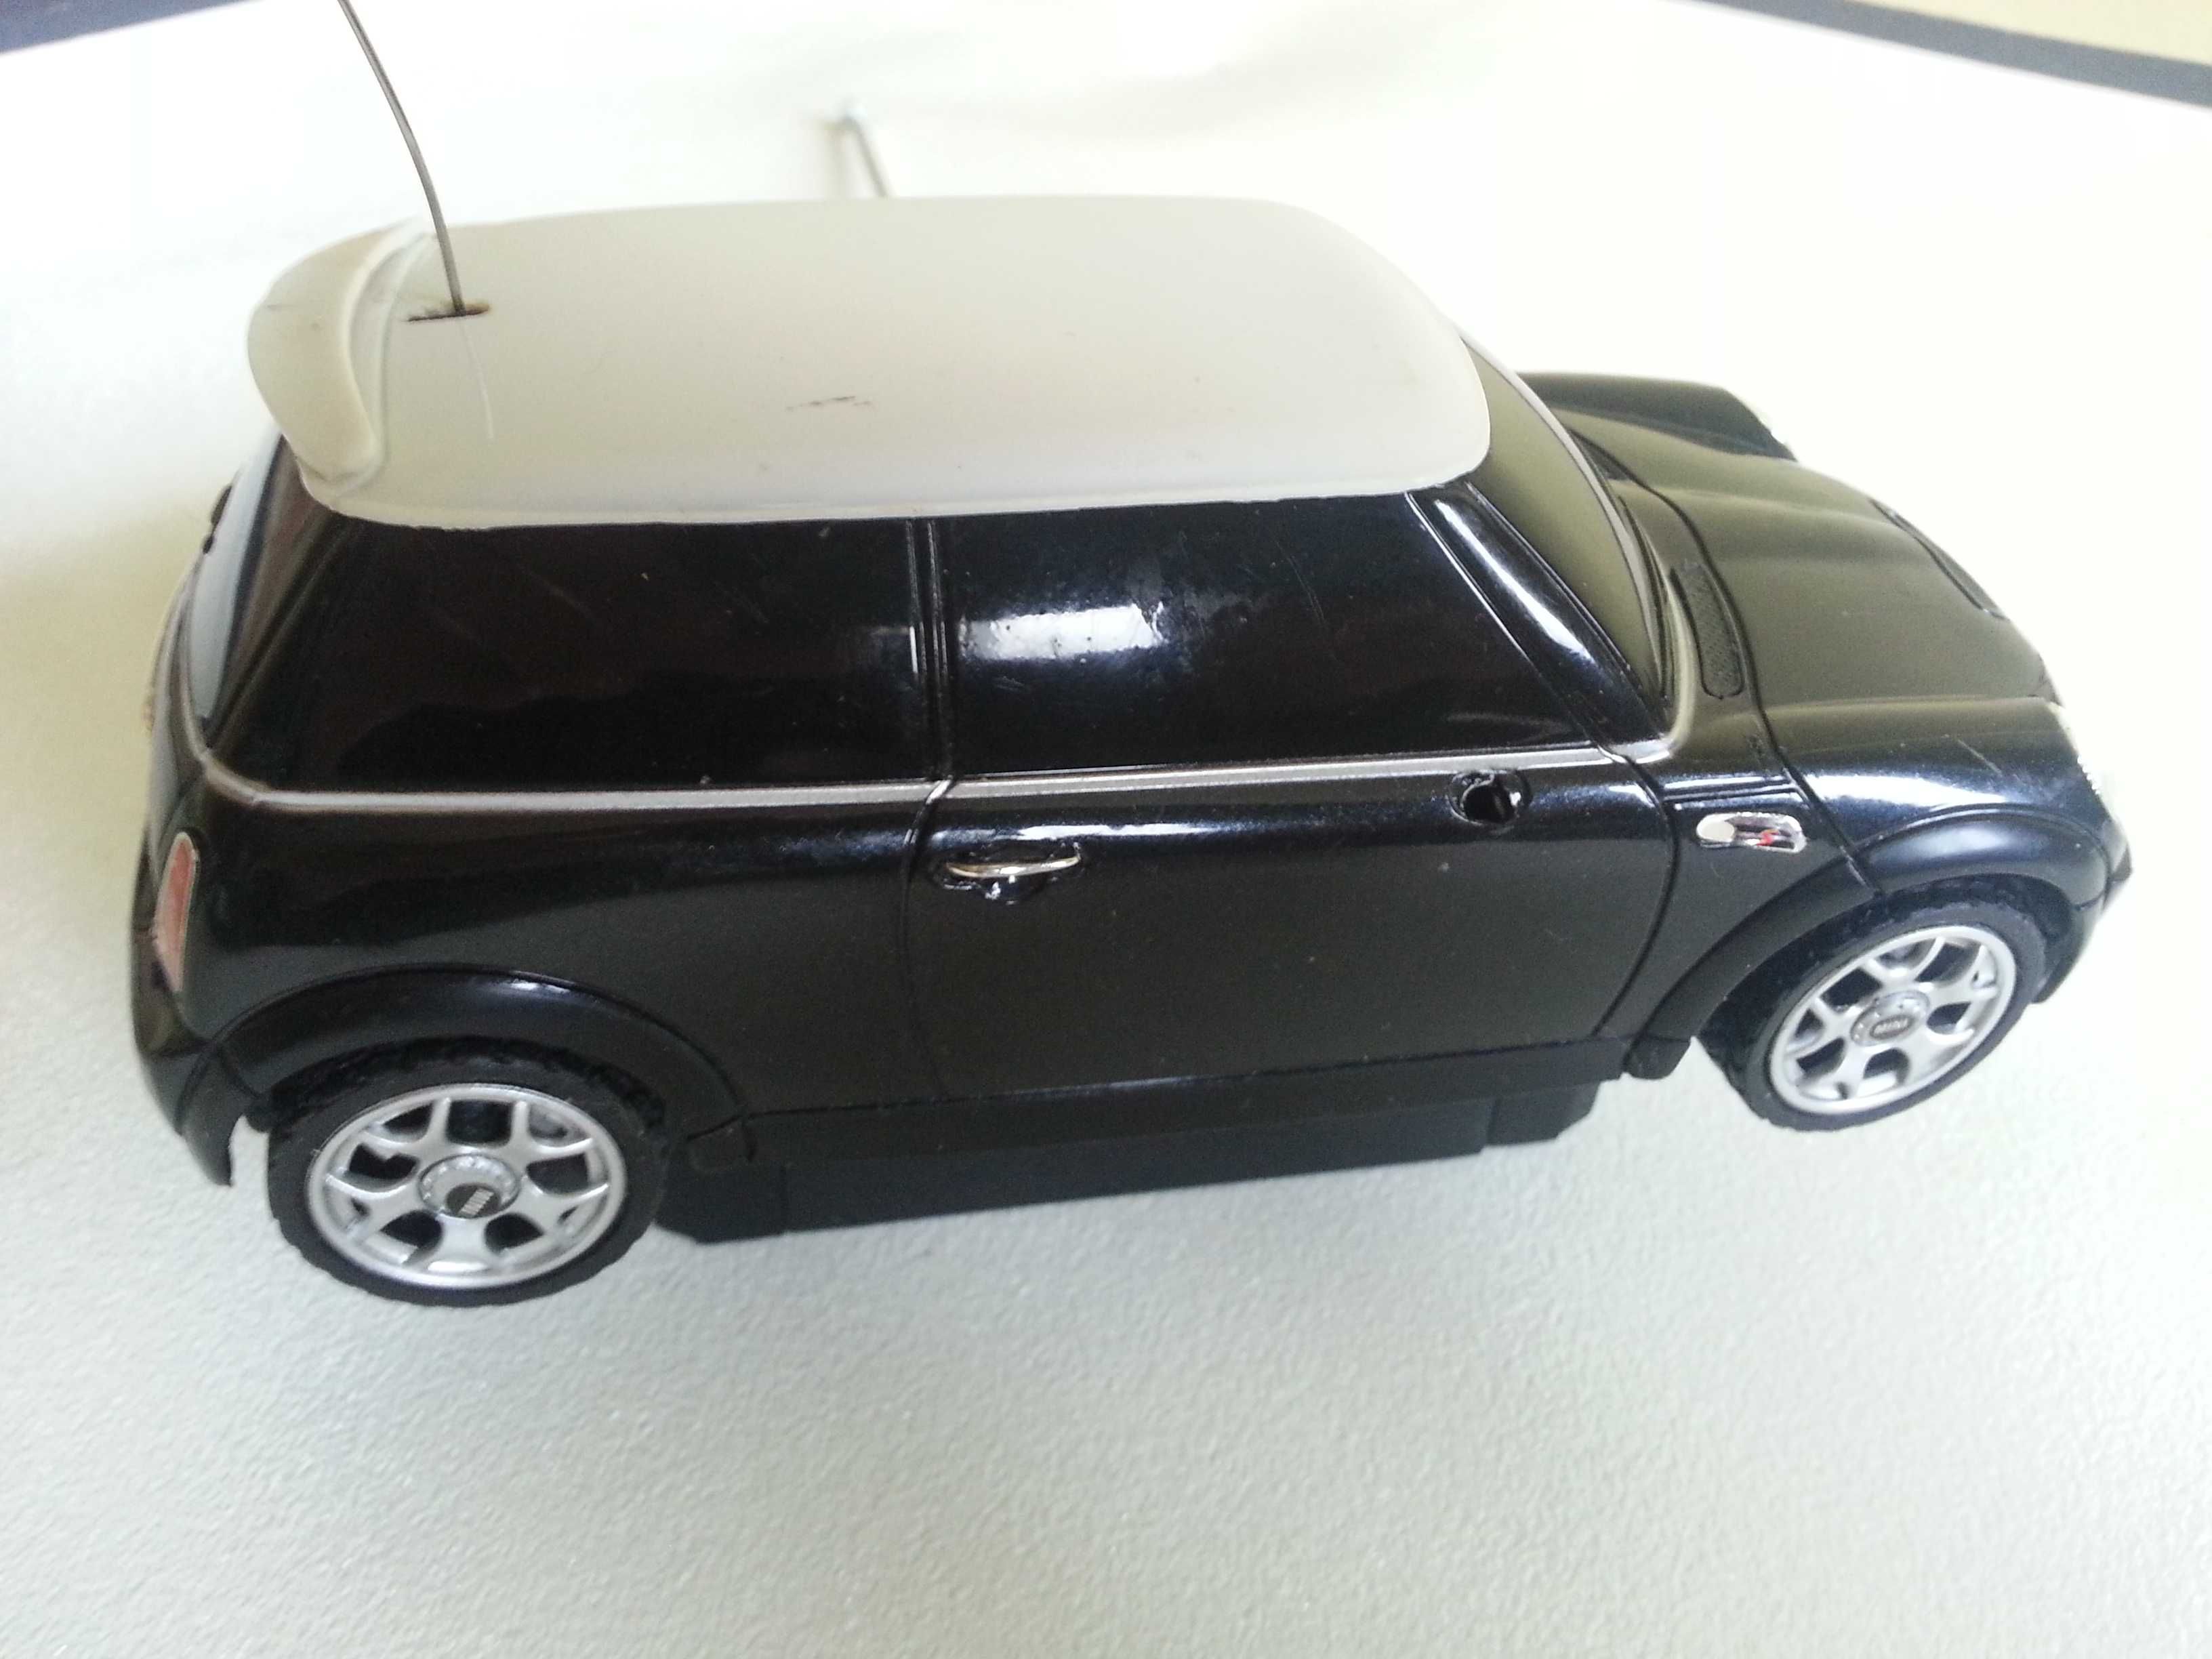 Model Mini cooper s autko sterowane zdalnie